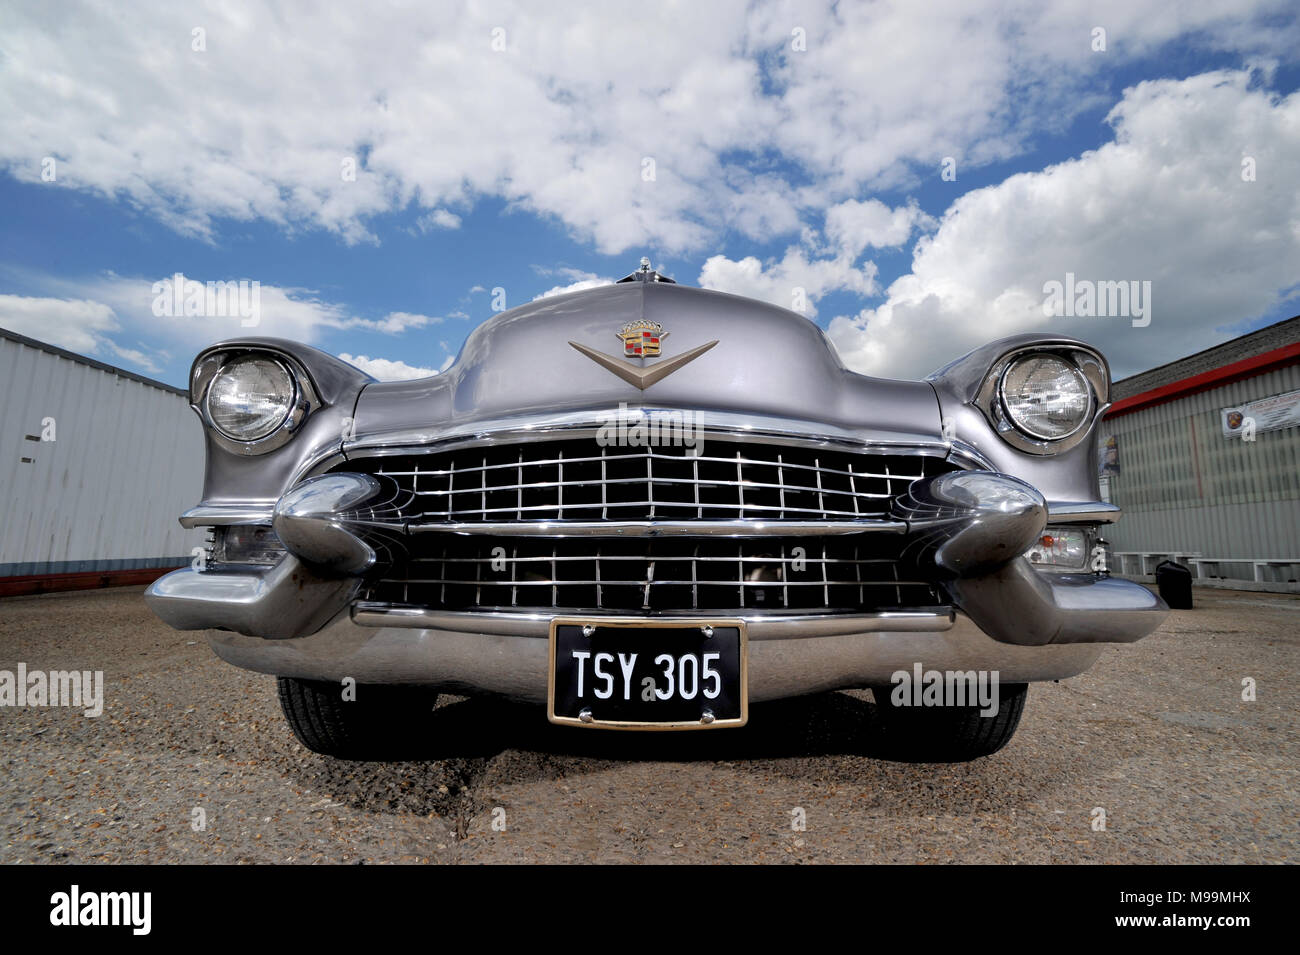 1955 Cadillac Coupe De Ville Series 62 American classic luxury car Stock Photo